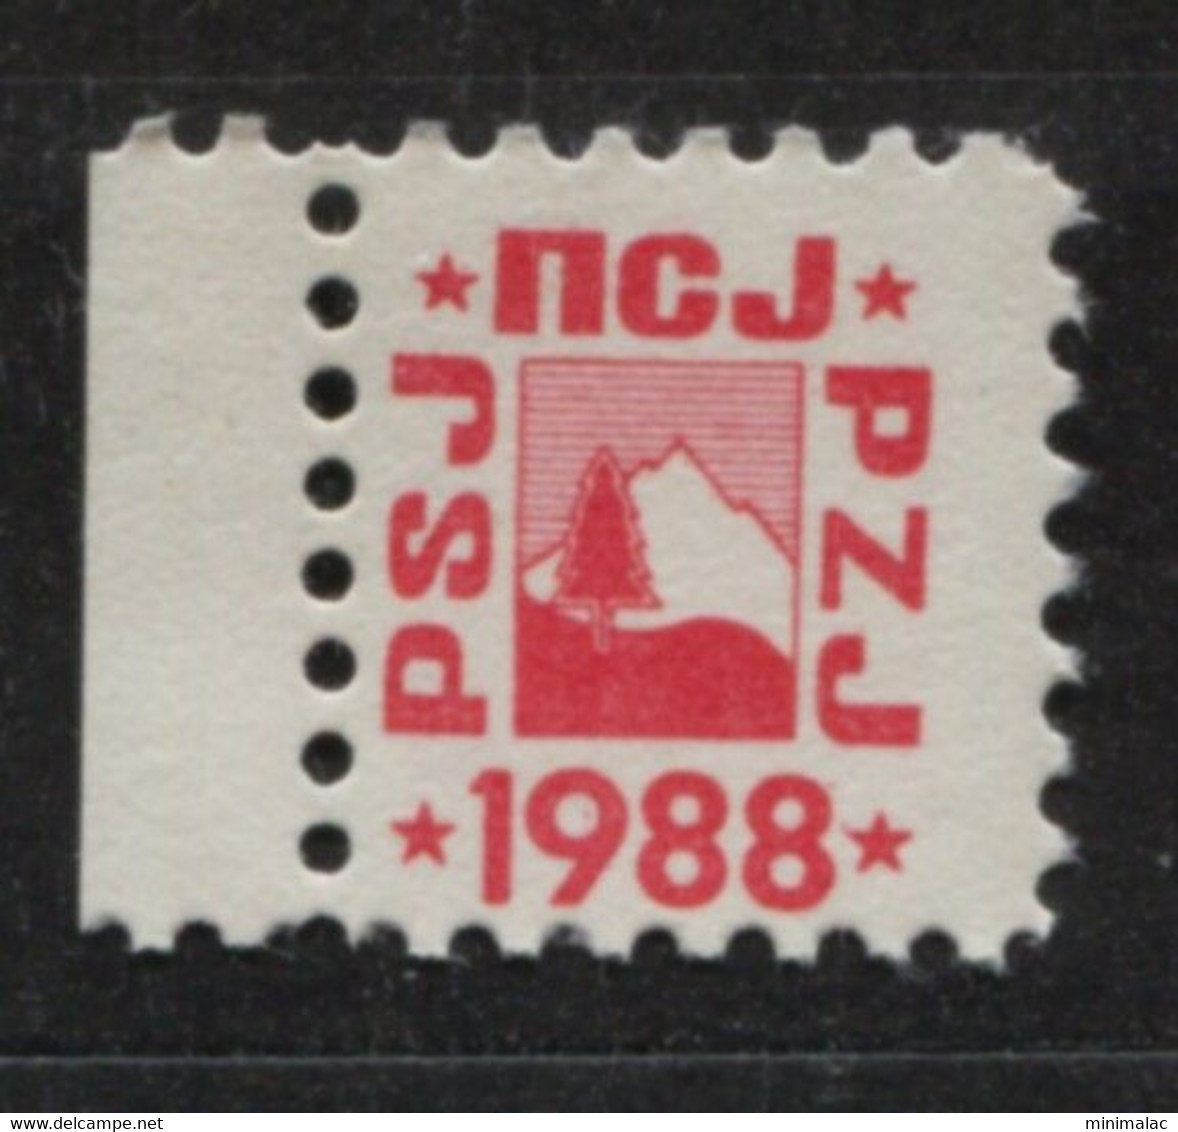 Yugoslavia 1988, Stamp For Membership Mountaineering Association Of Yugoslavia, Revenue, Tax Stamp, Cinderella, Red - Servizio